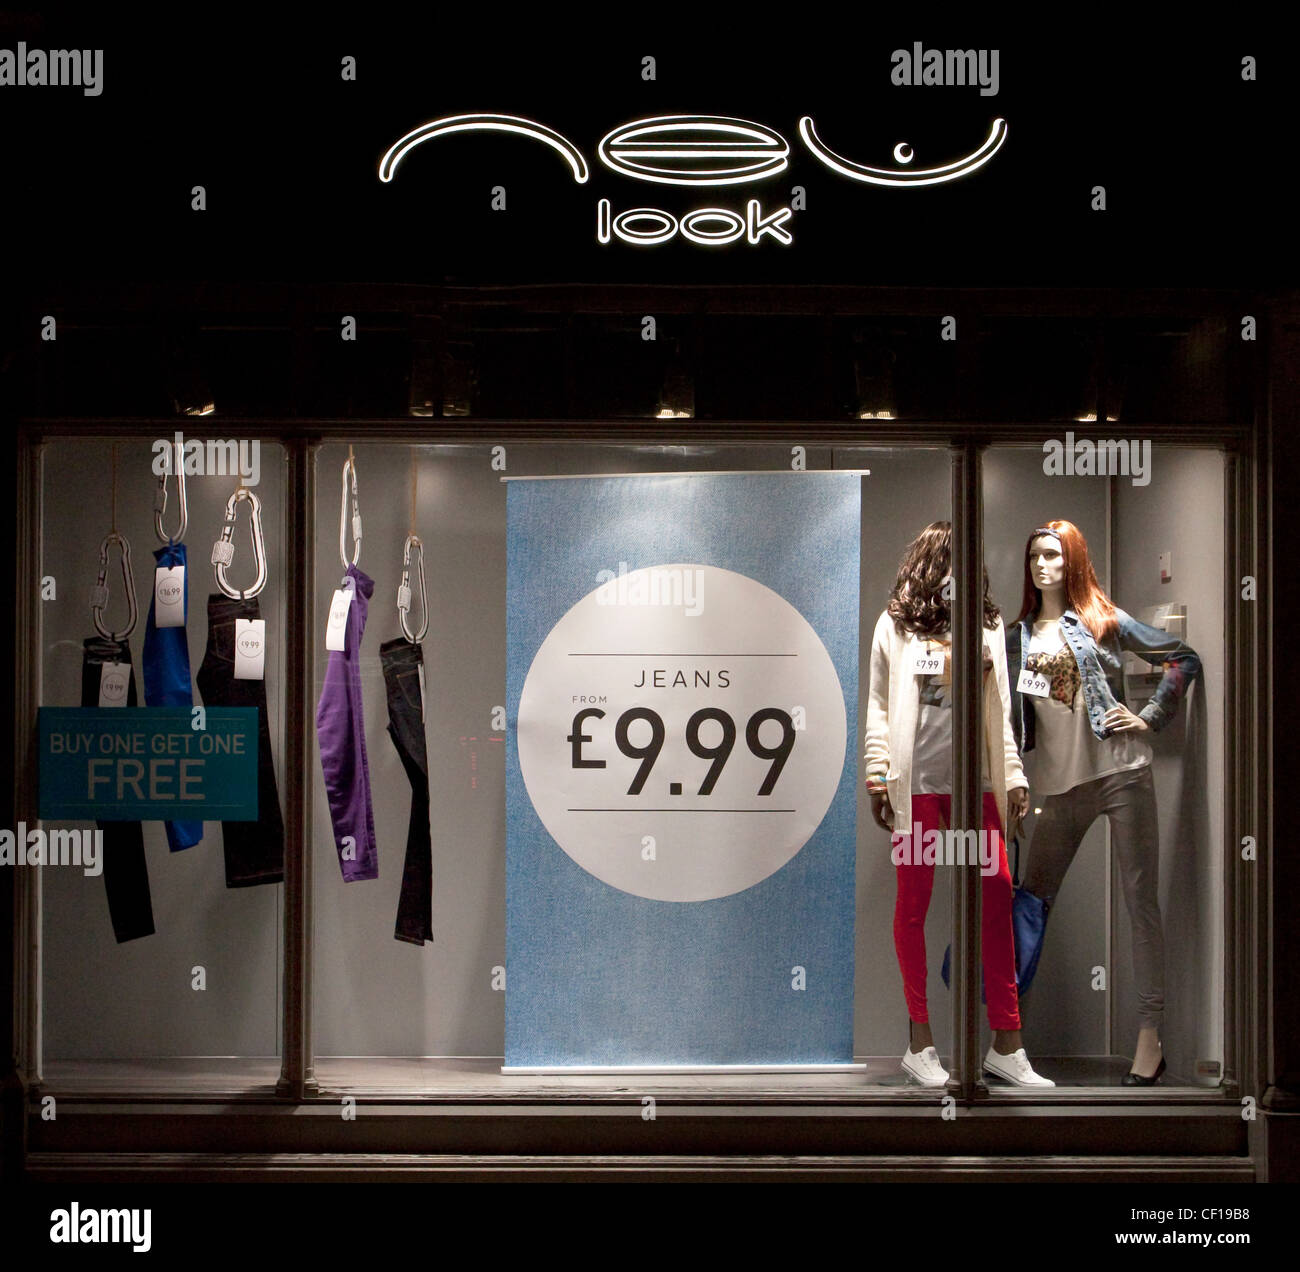 New Look Shop Store Illuminated Window Display Stock Photo